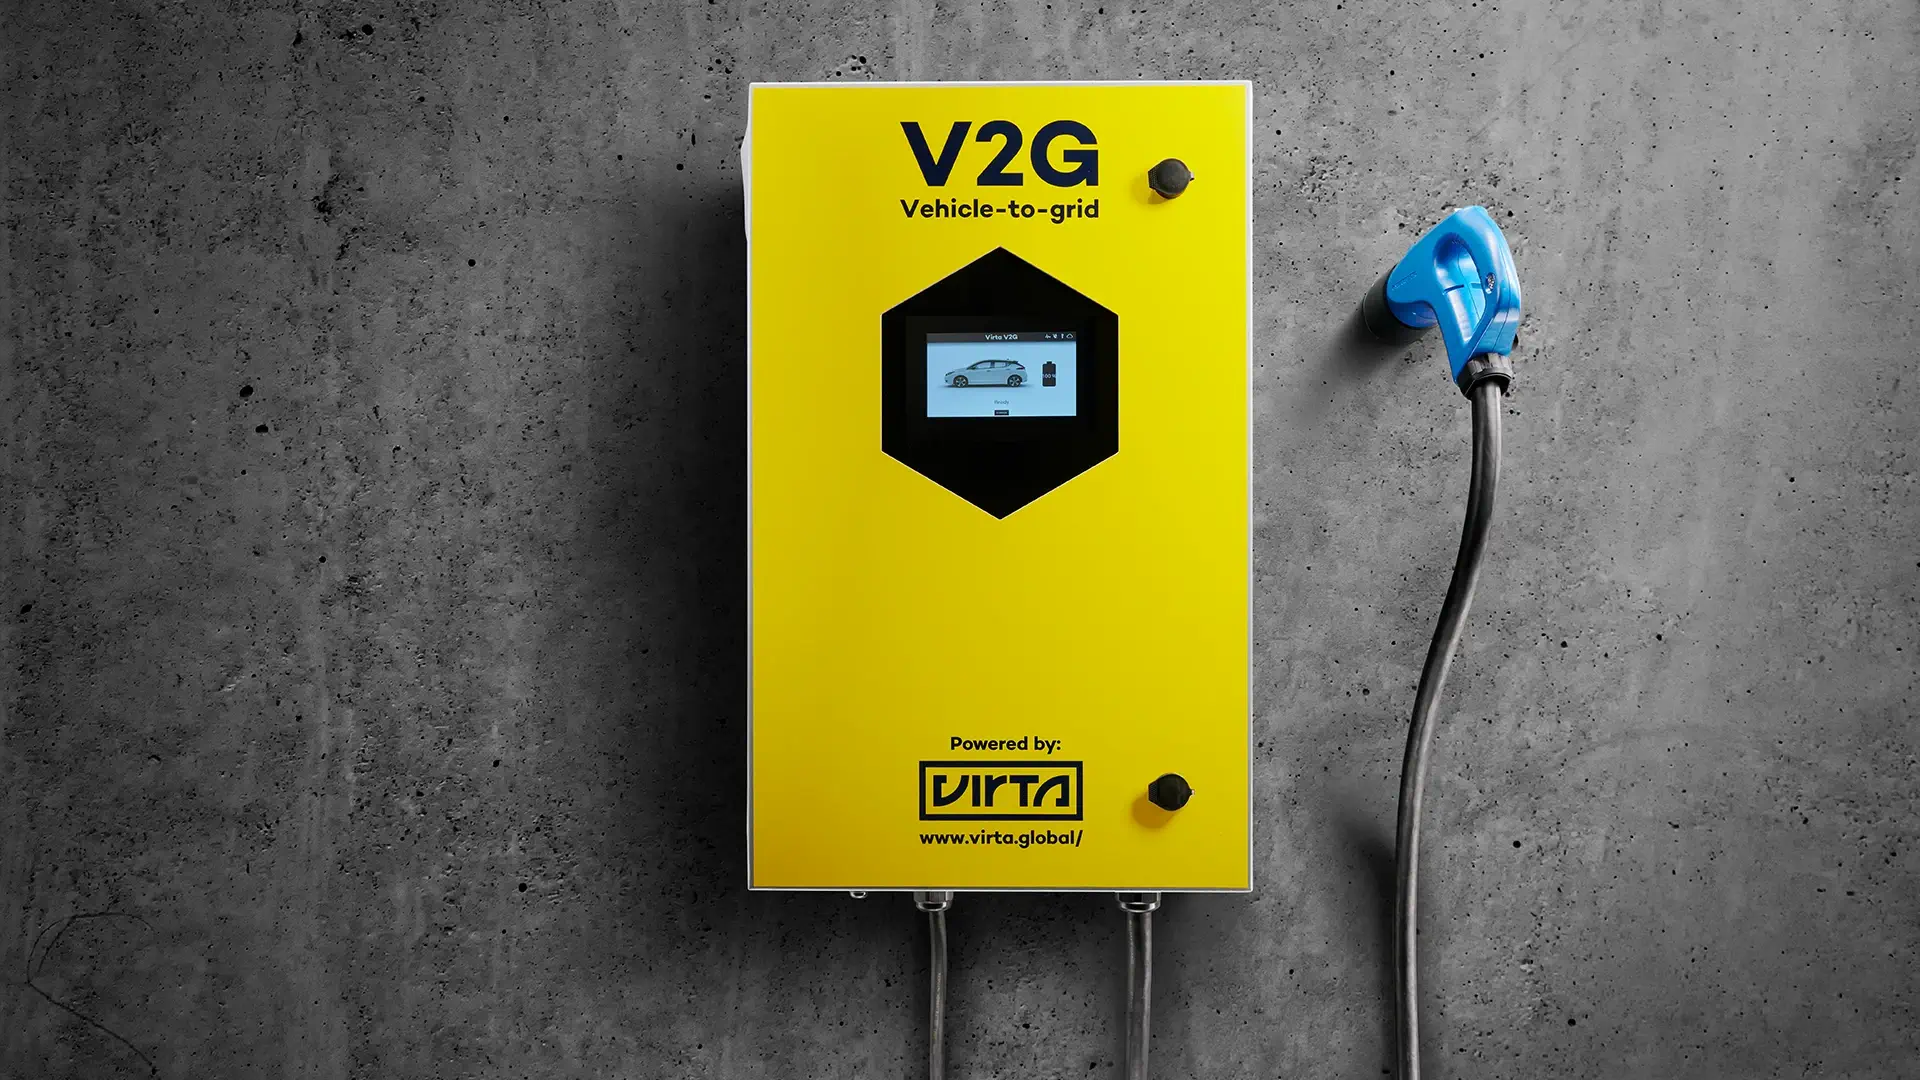 Virta electric vehicle V2G charger display